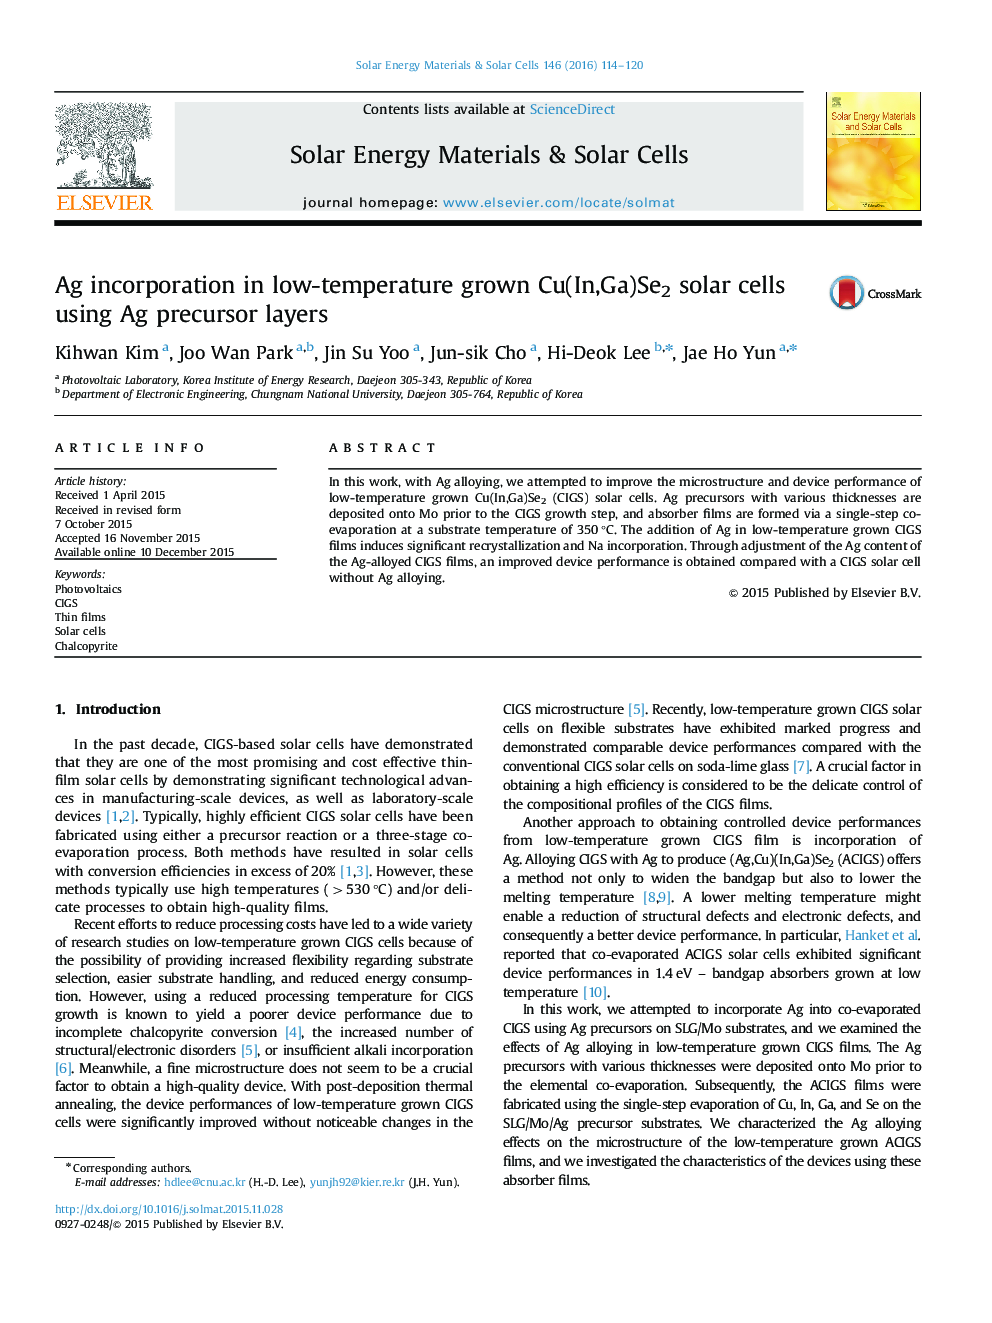 Ag incorporation in low-temperature grown Cu(In,Ga)Se2 solar cells using Ag precursor layers